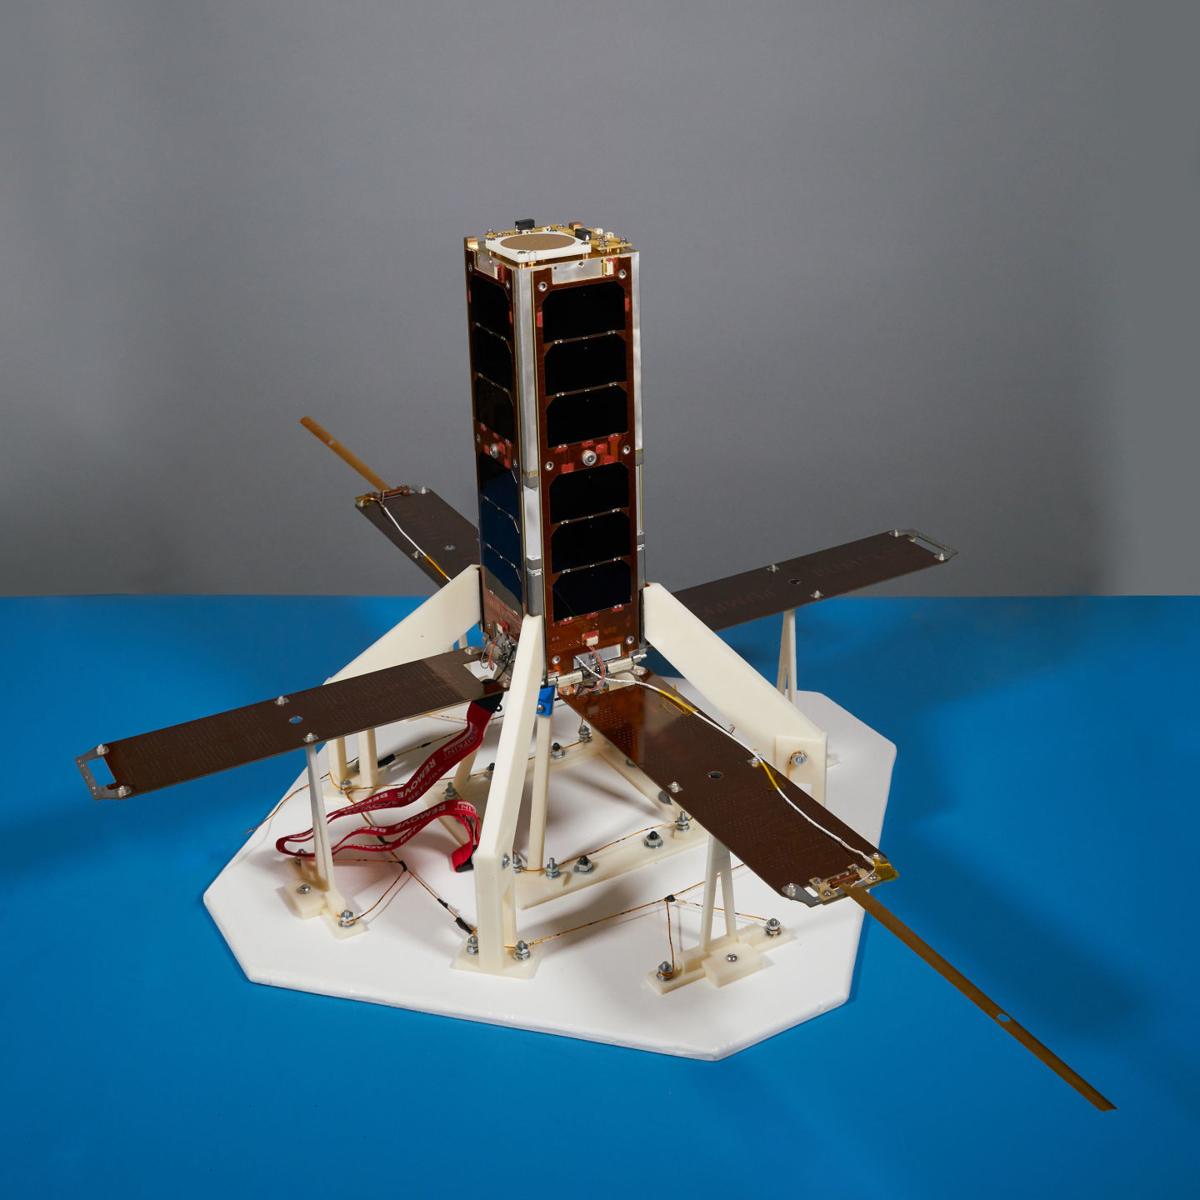 Tucson Tech: Vector sues aerospace giant Lockheed over mini-satellite tech